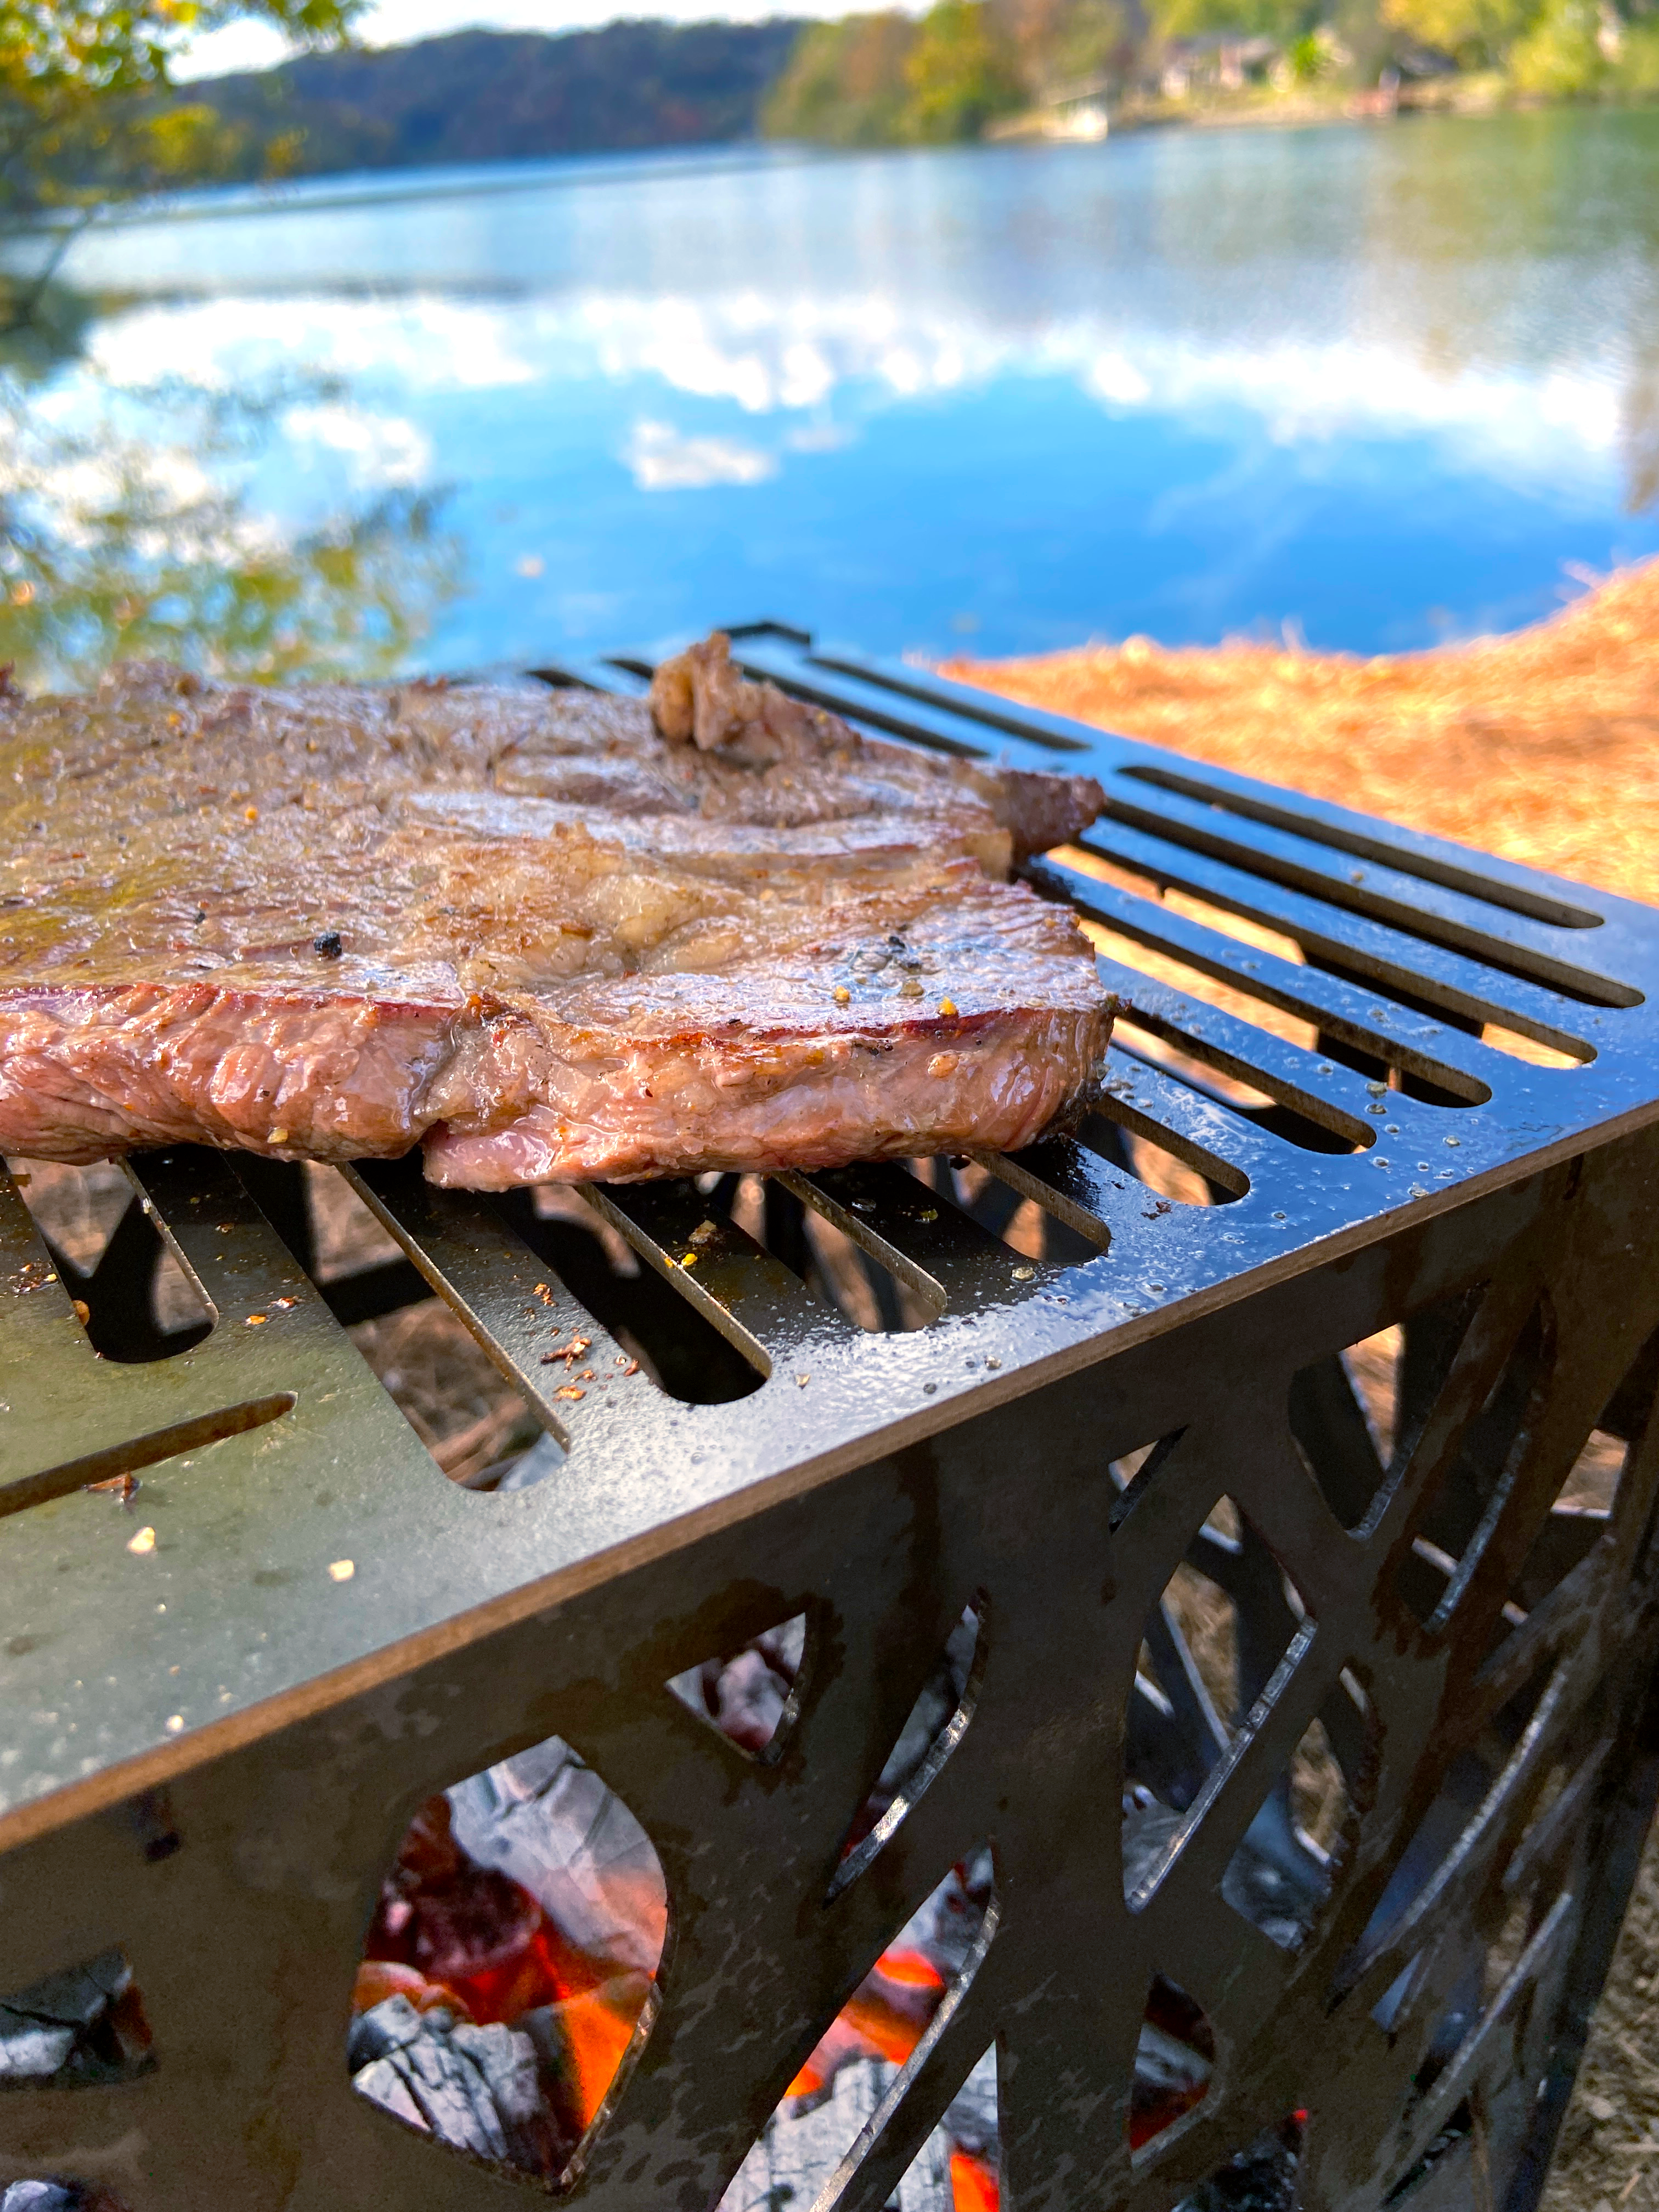 Sizzling steak on fire pit grill